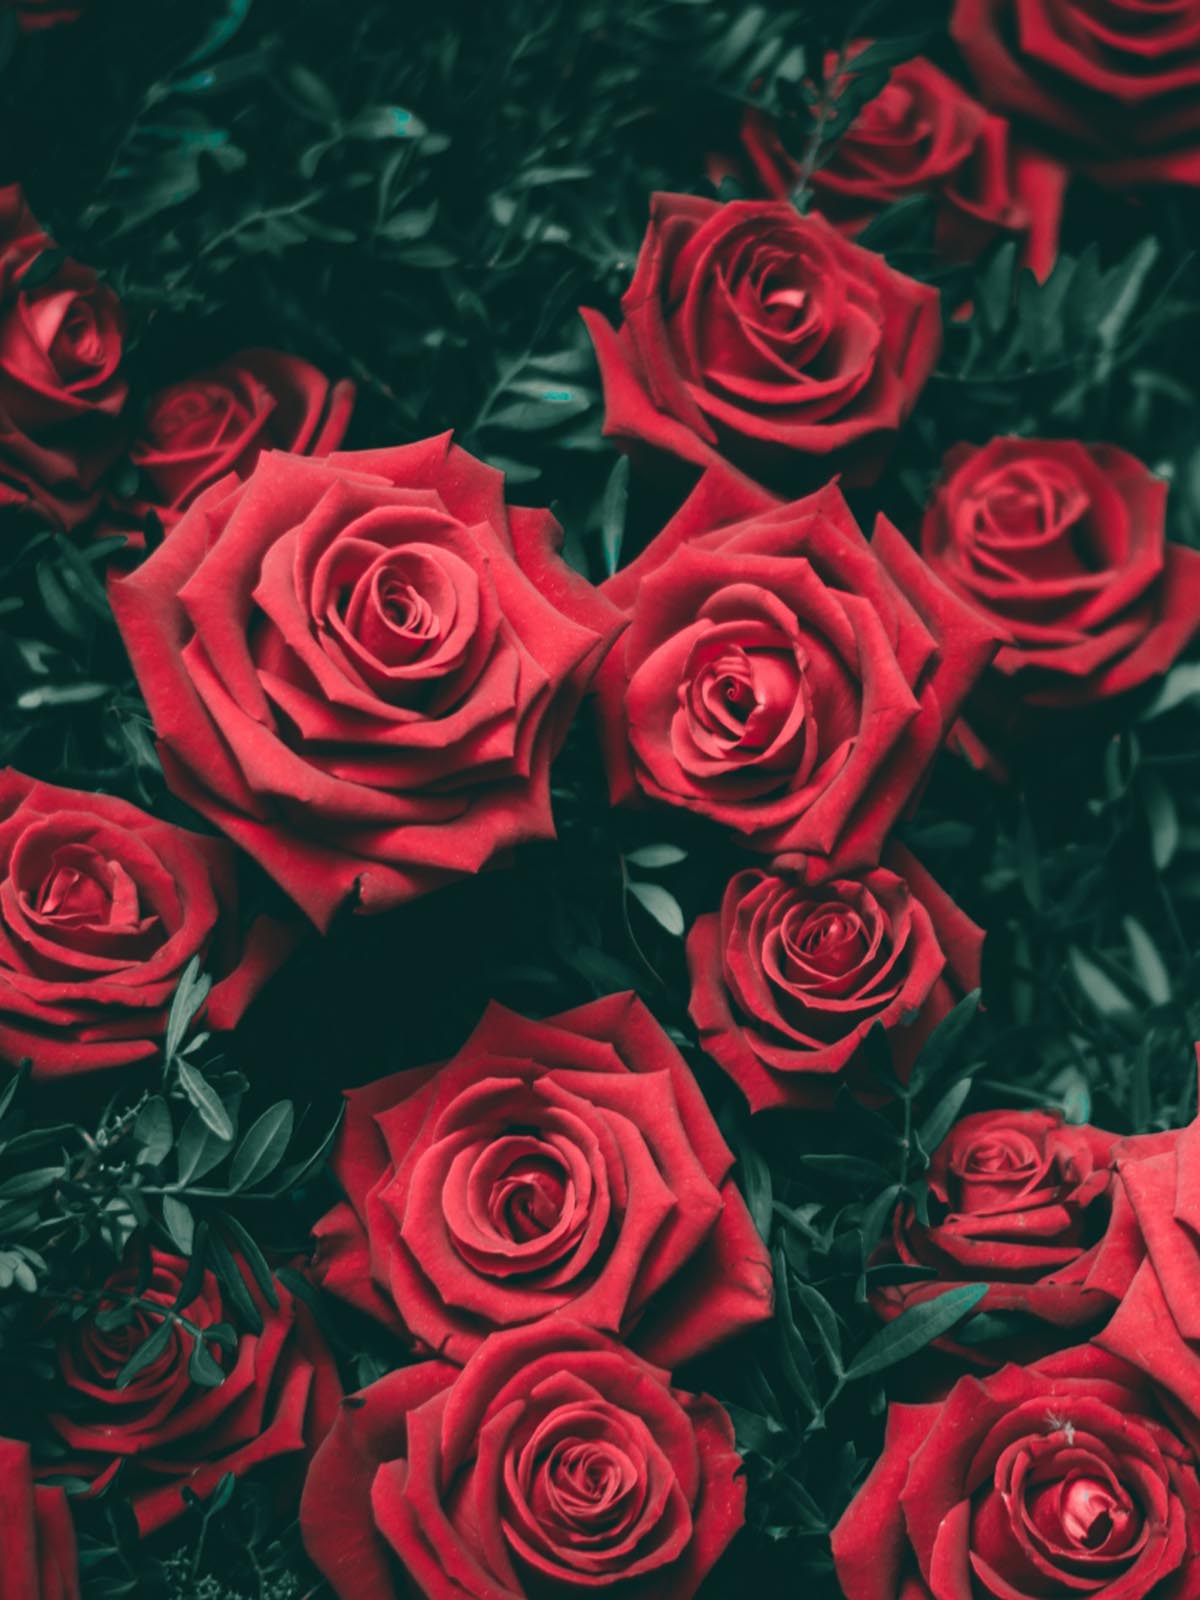 rosa rossa hd wallpaper per cellulari,rose da giardino,rosa,rosso,fiore,floribunda